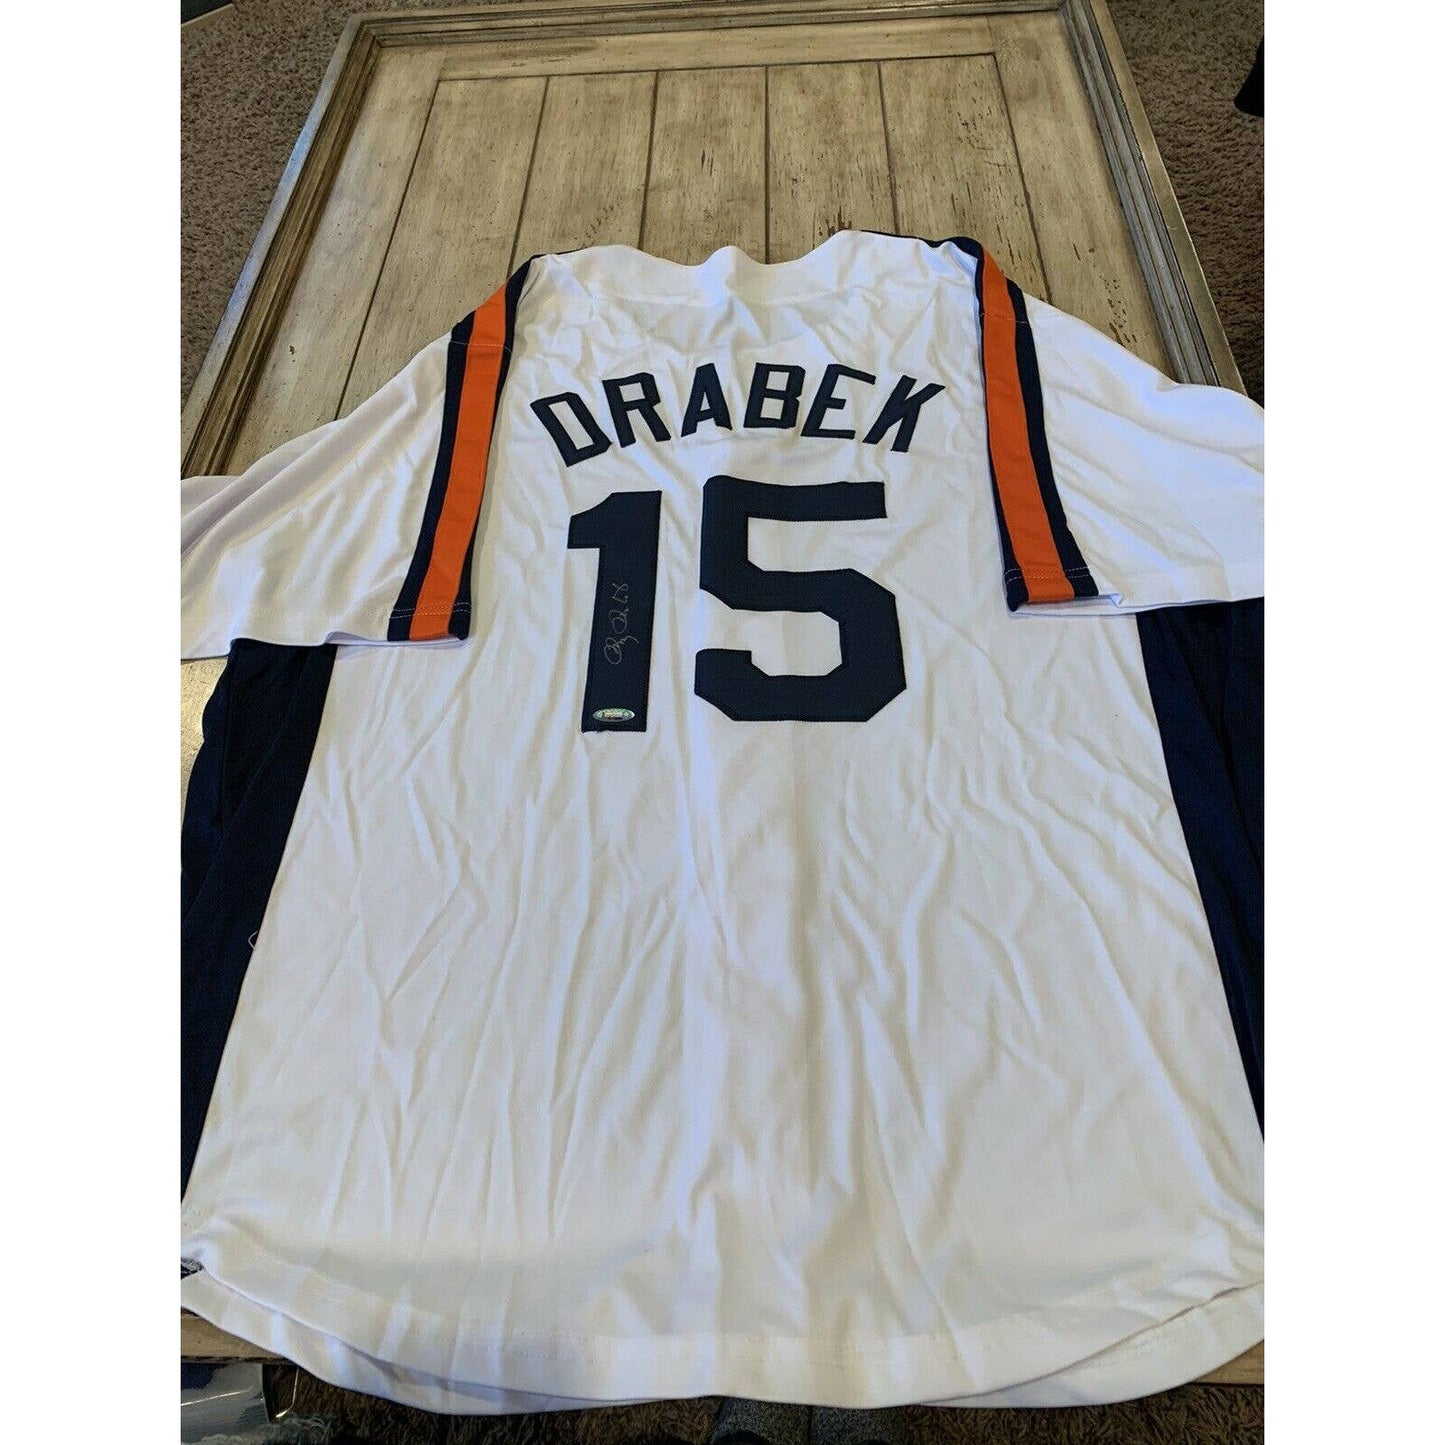 Doug Drabek Autographed/Signed Jersey TRISTAR Houston Astros - TreasuresEvolved